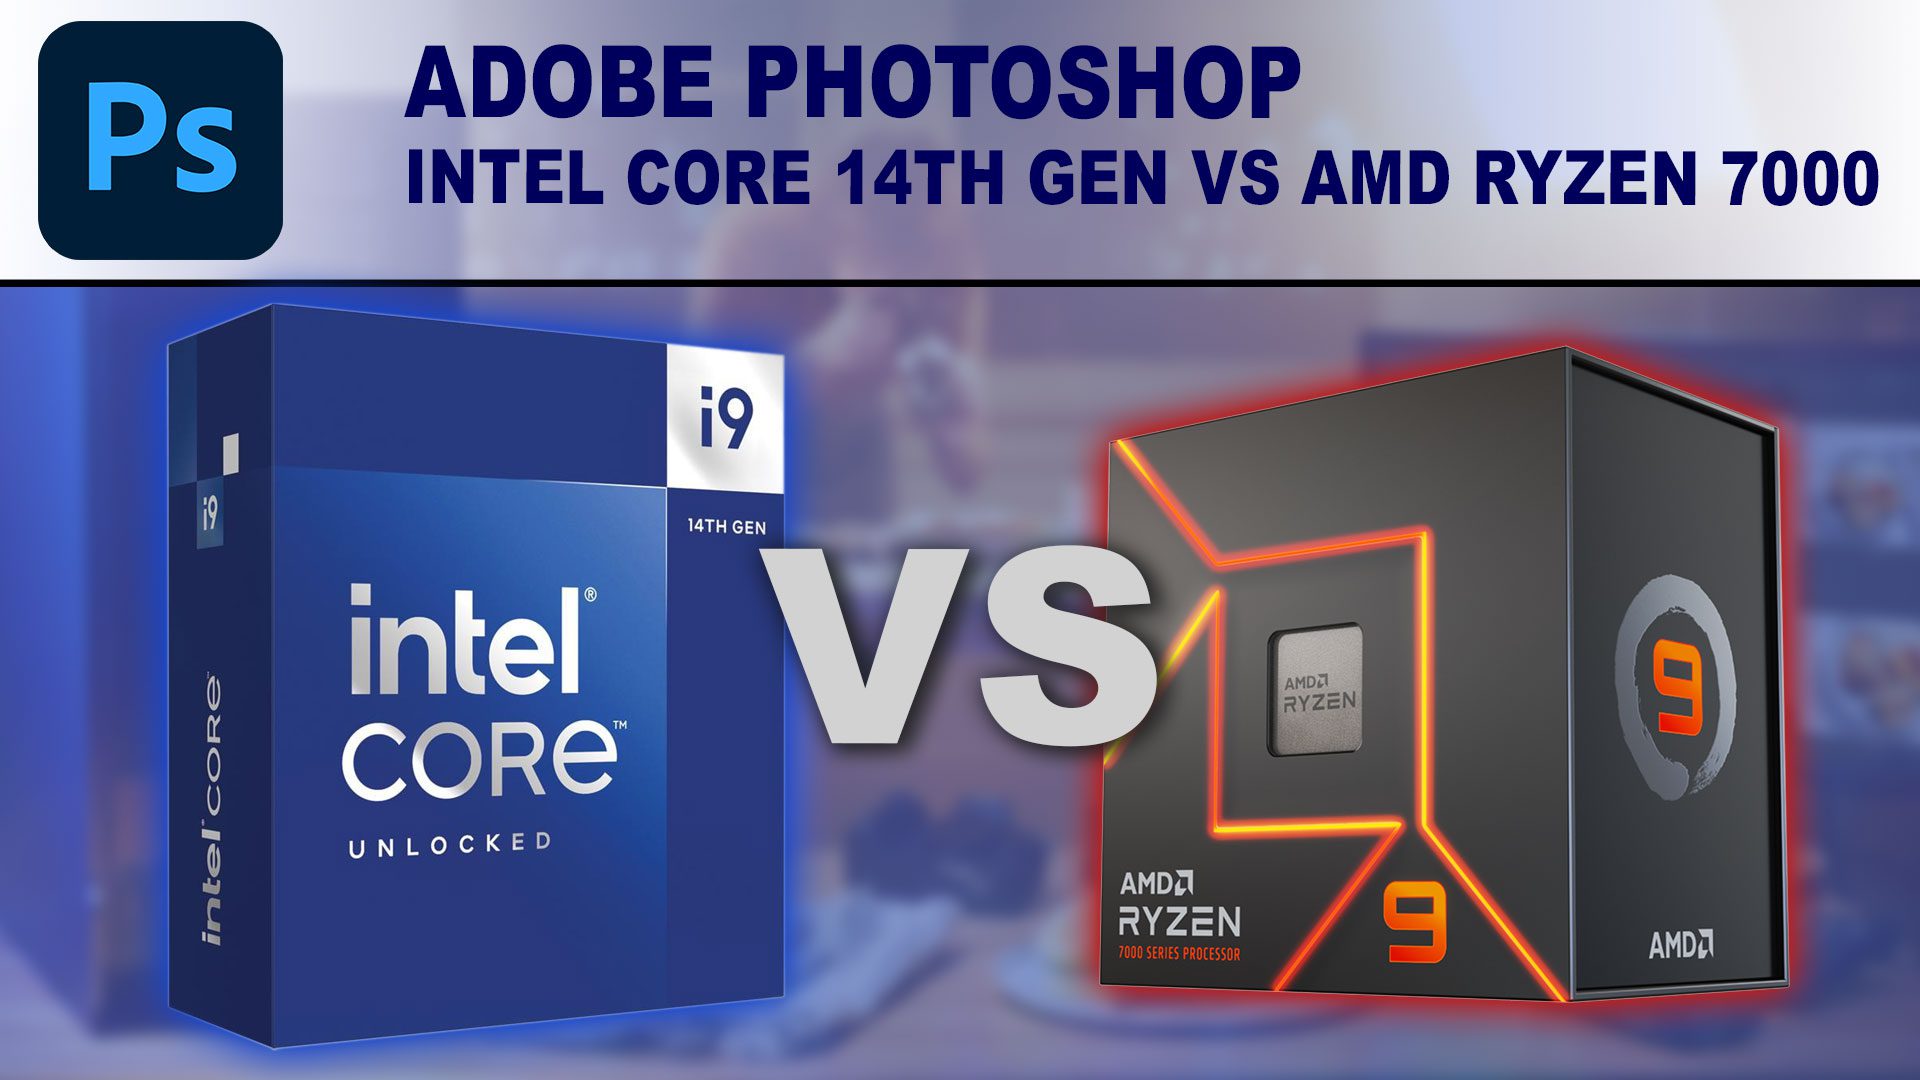 Adobe Photoshop: Intel Core 14th Gen vs AMD Ryzen 7000 | Puget Systems